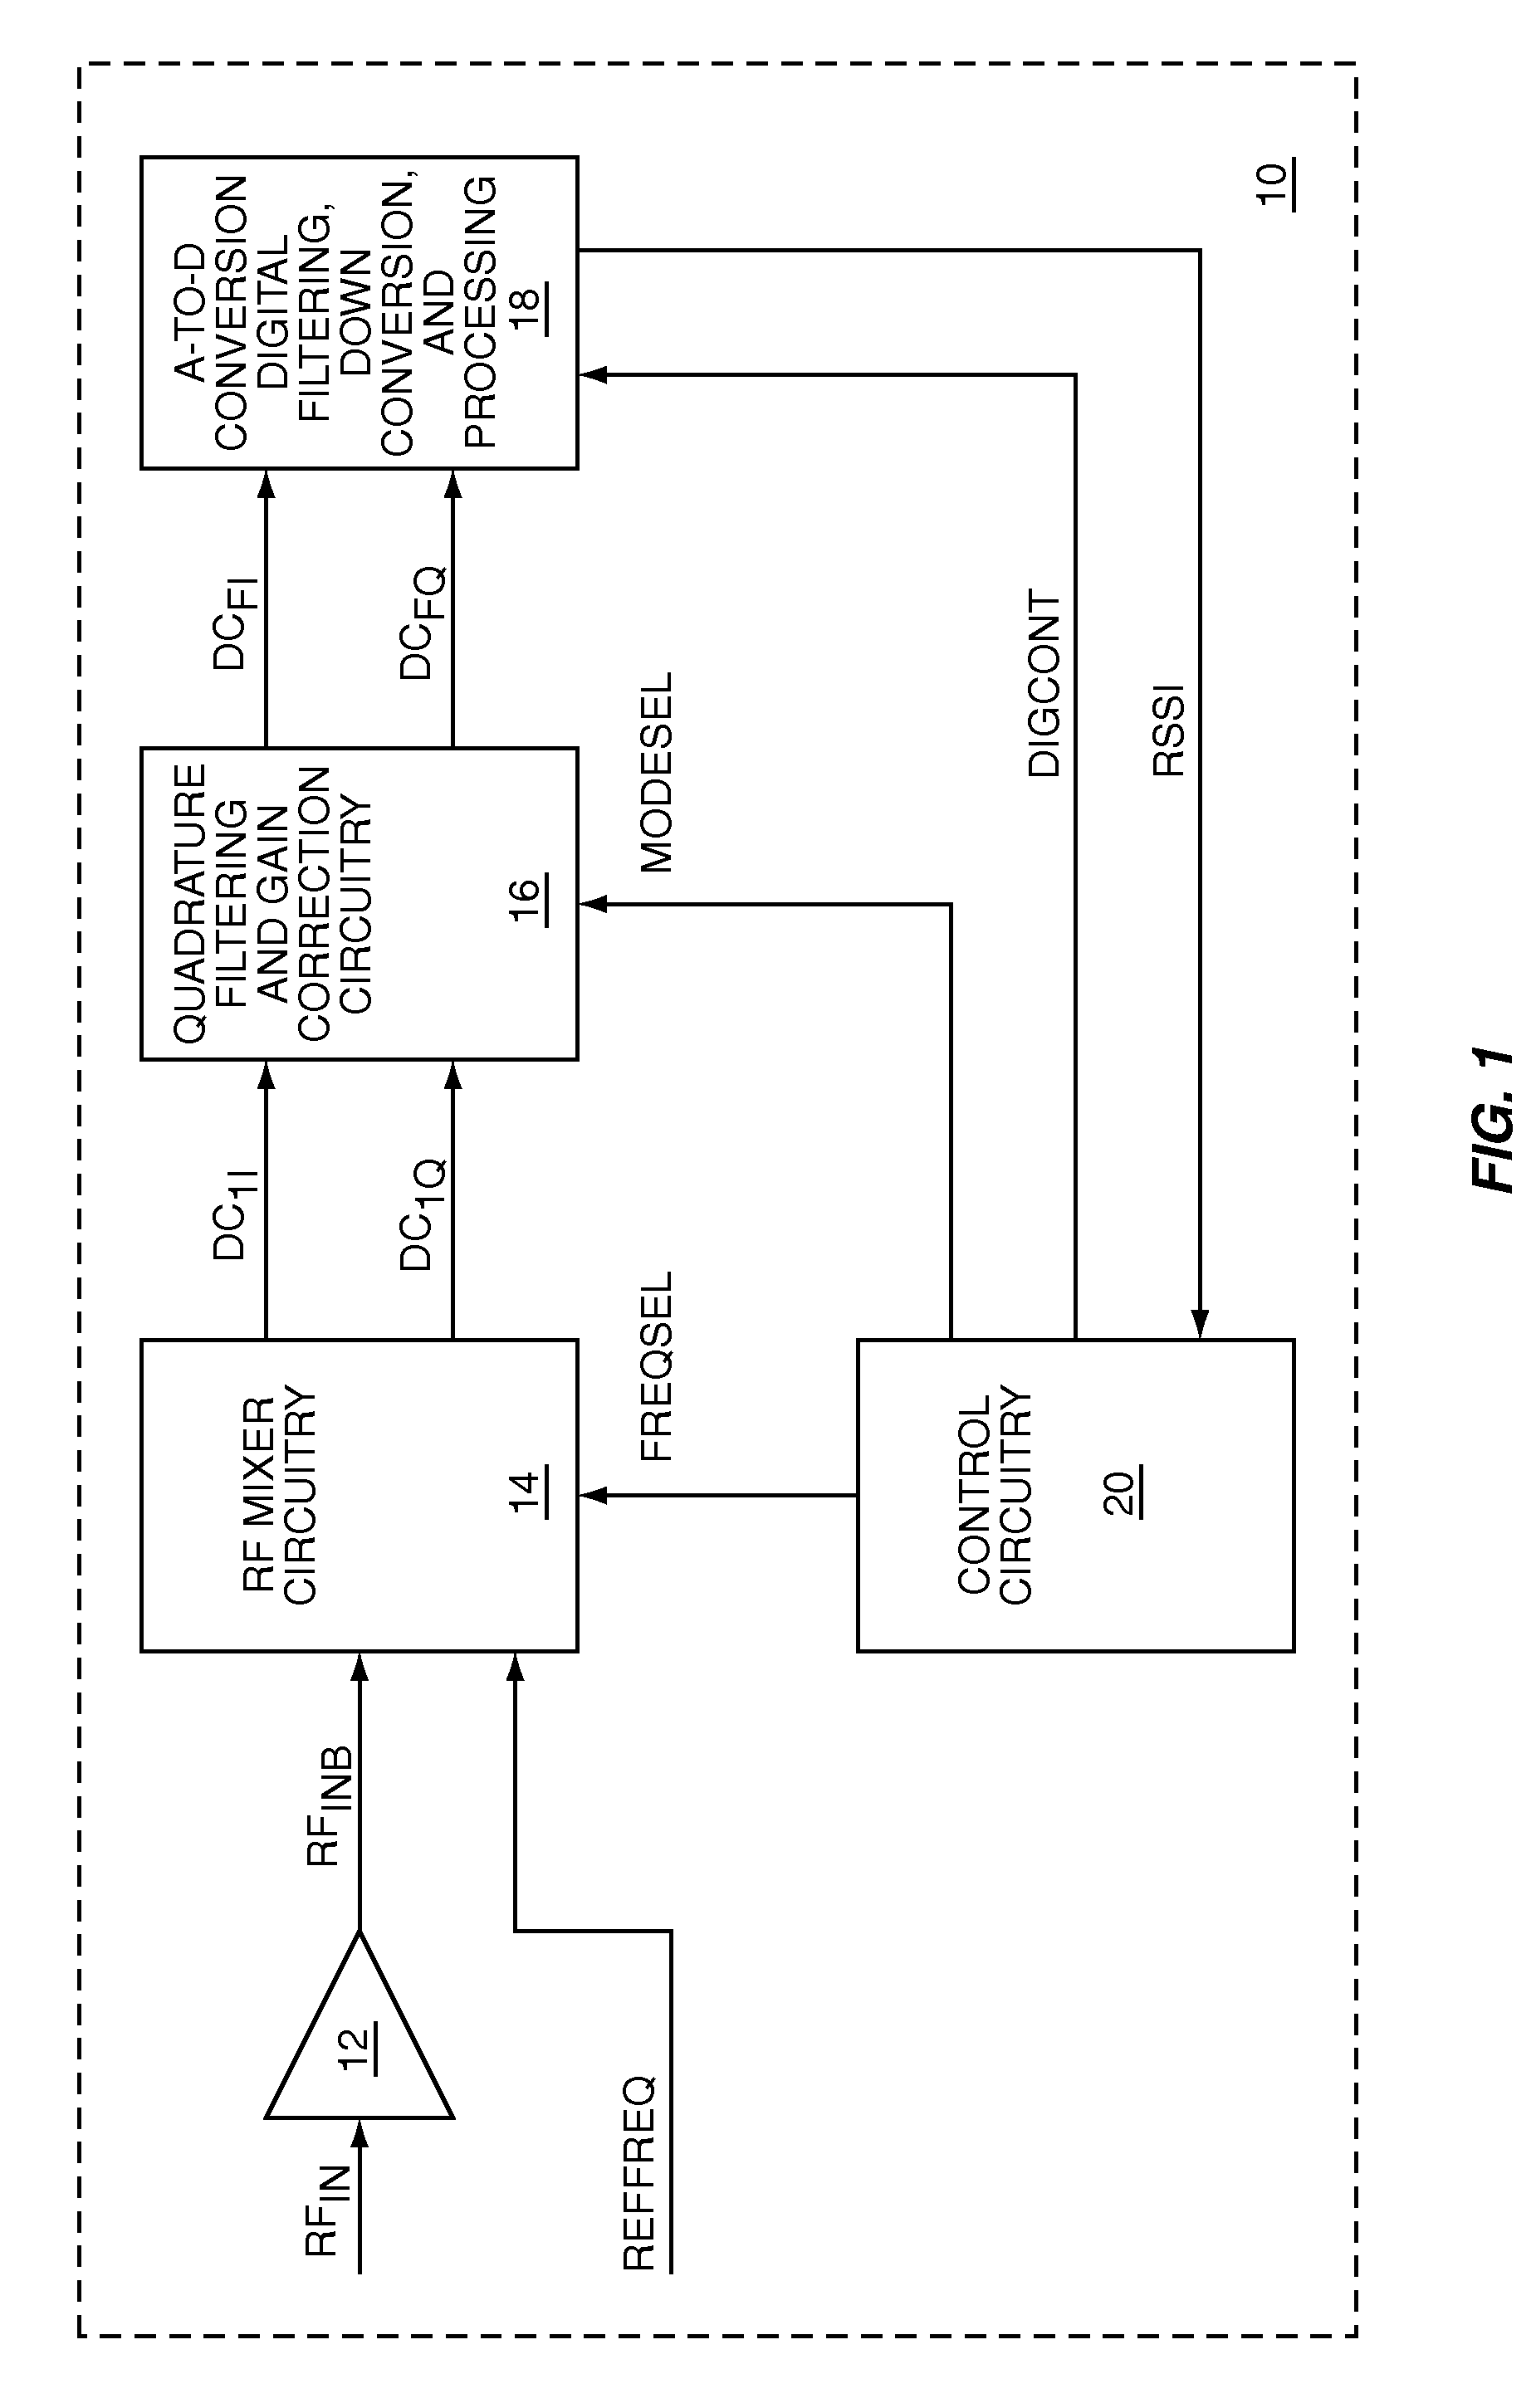 Quadrature single-mixer multi-mode radio frequency receiver